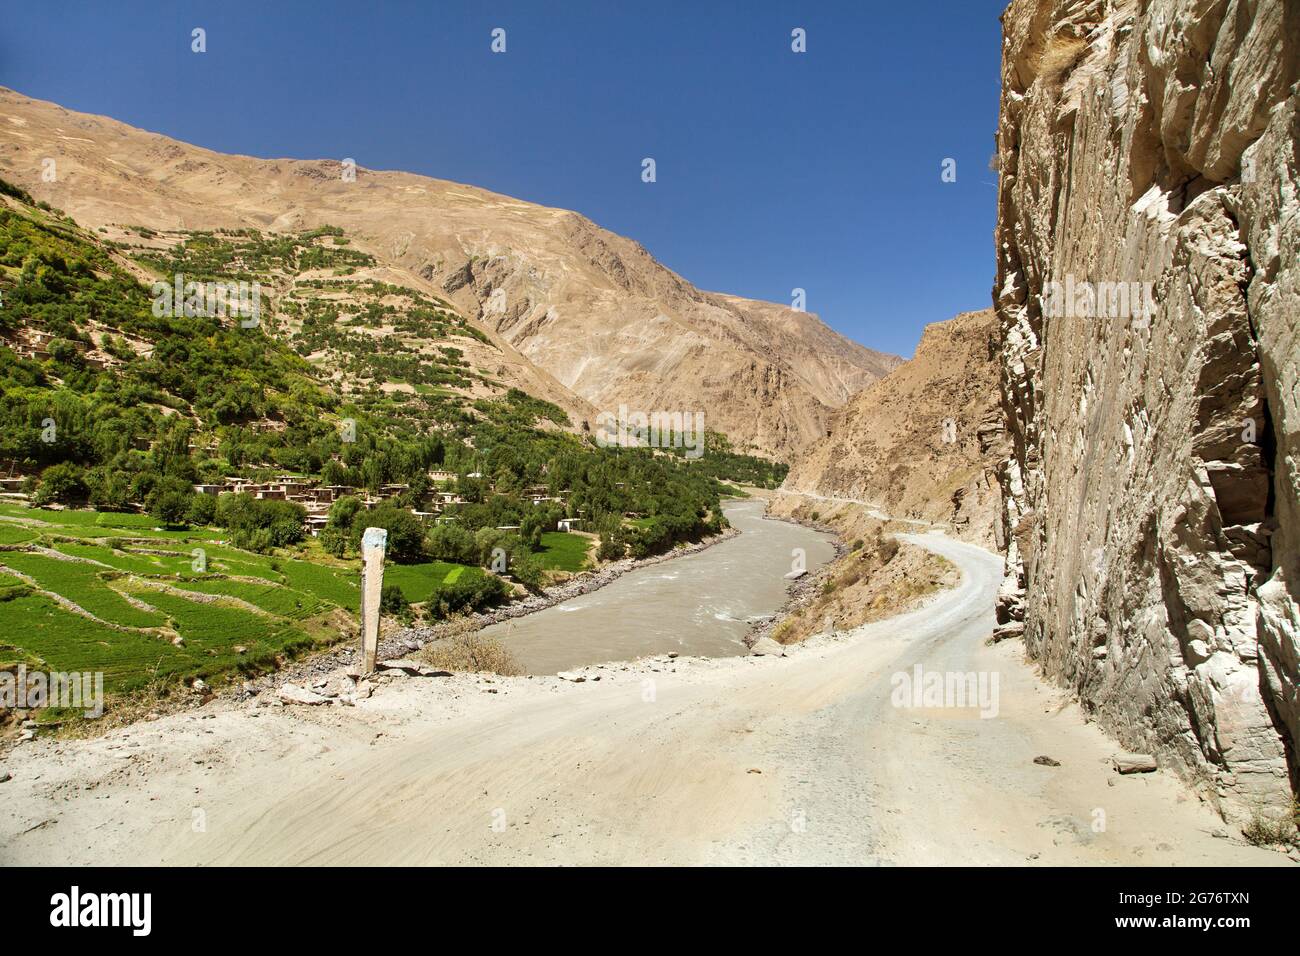 Autostrada Pamir M41 strada internazionale o pamirskij trakt. Fiume Panj e monti Pamir. Panj è la parte superiore del fiume Amu Darya. Vista panoramica.Tajikis Foto Stock